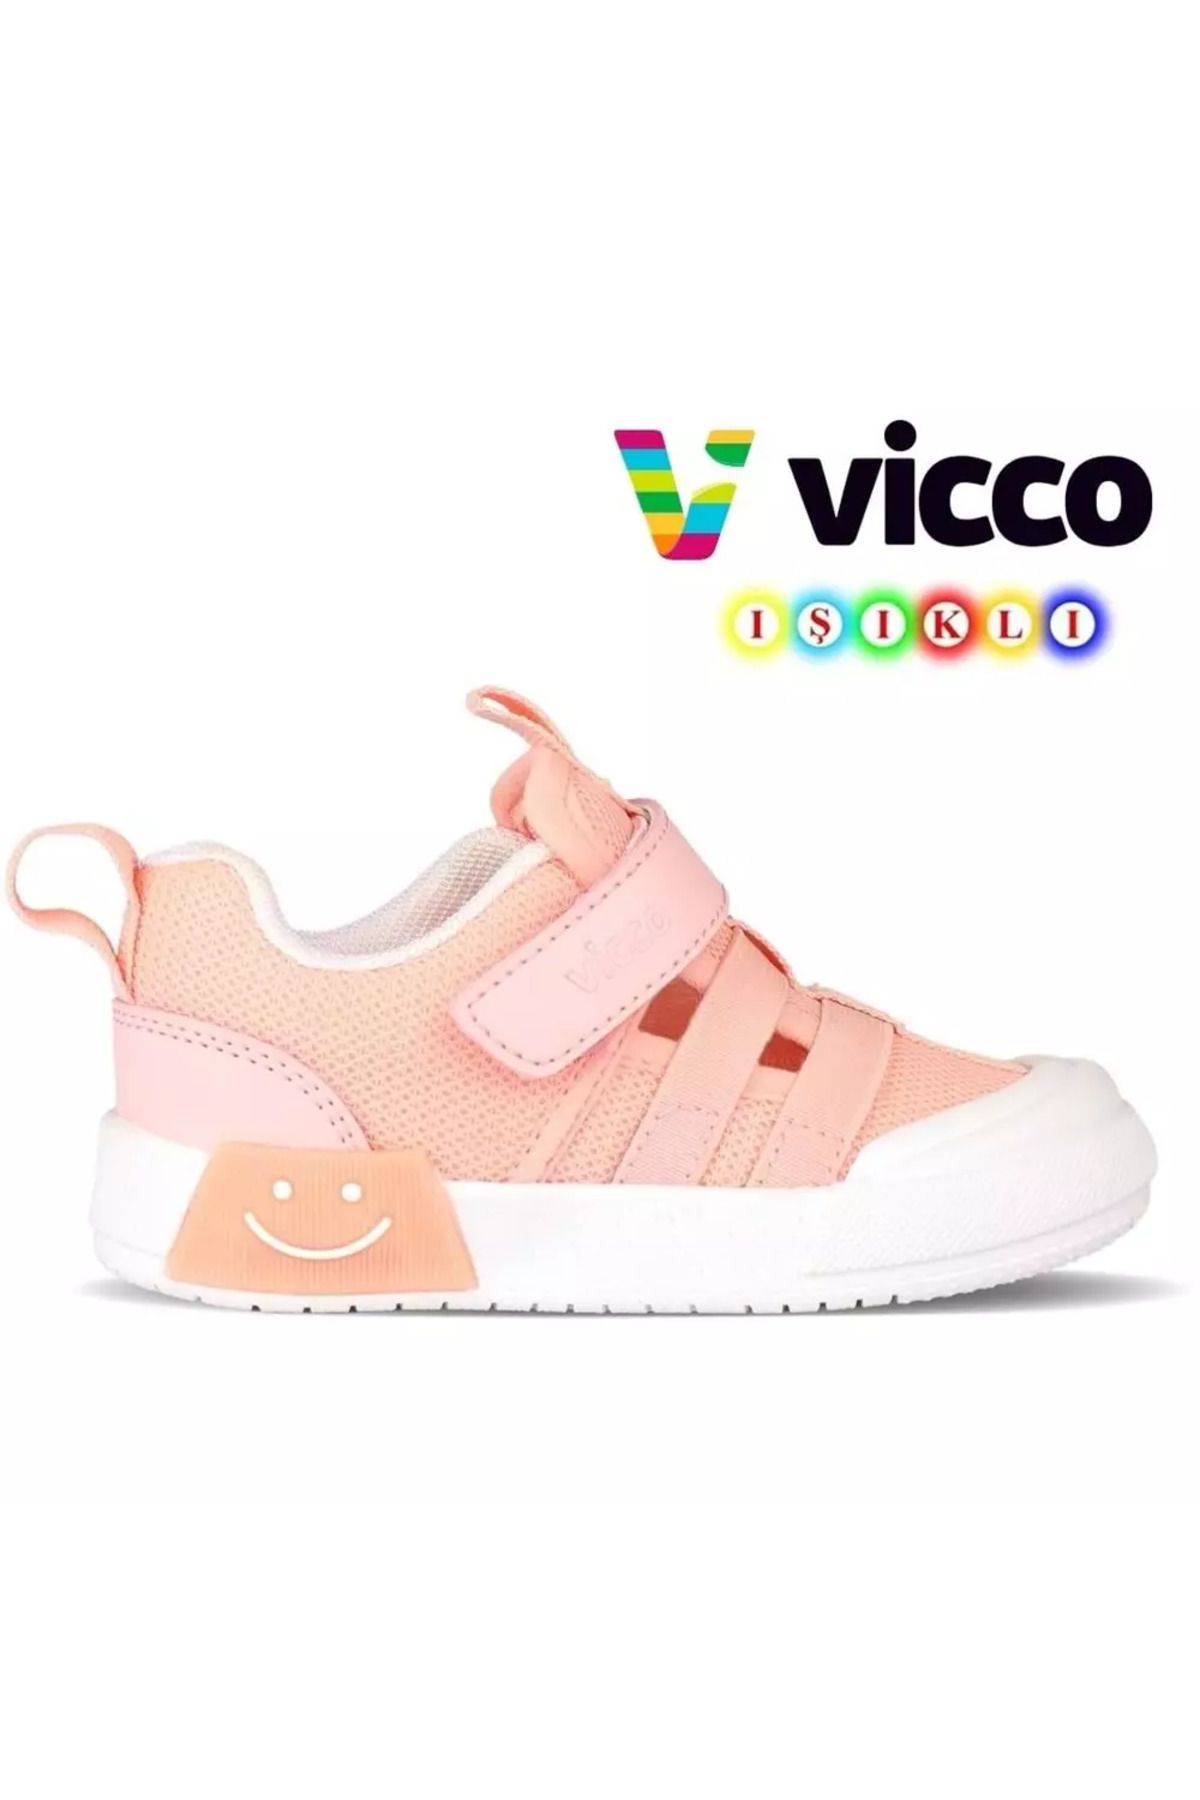 Vicco Momo 346.B24Y.145 Cırtlı Termo Kaymaz Taban Işıklı Çocuk Spor Ayakkabı PUDRA